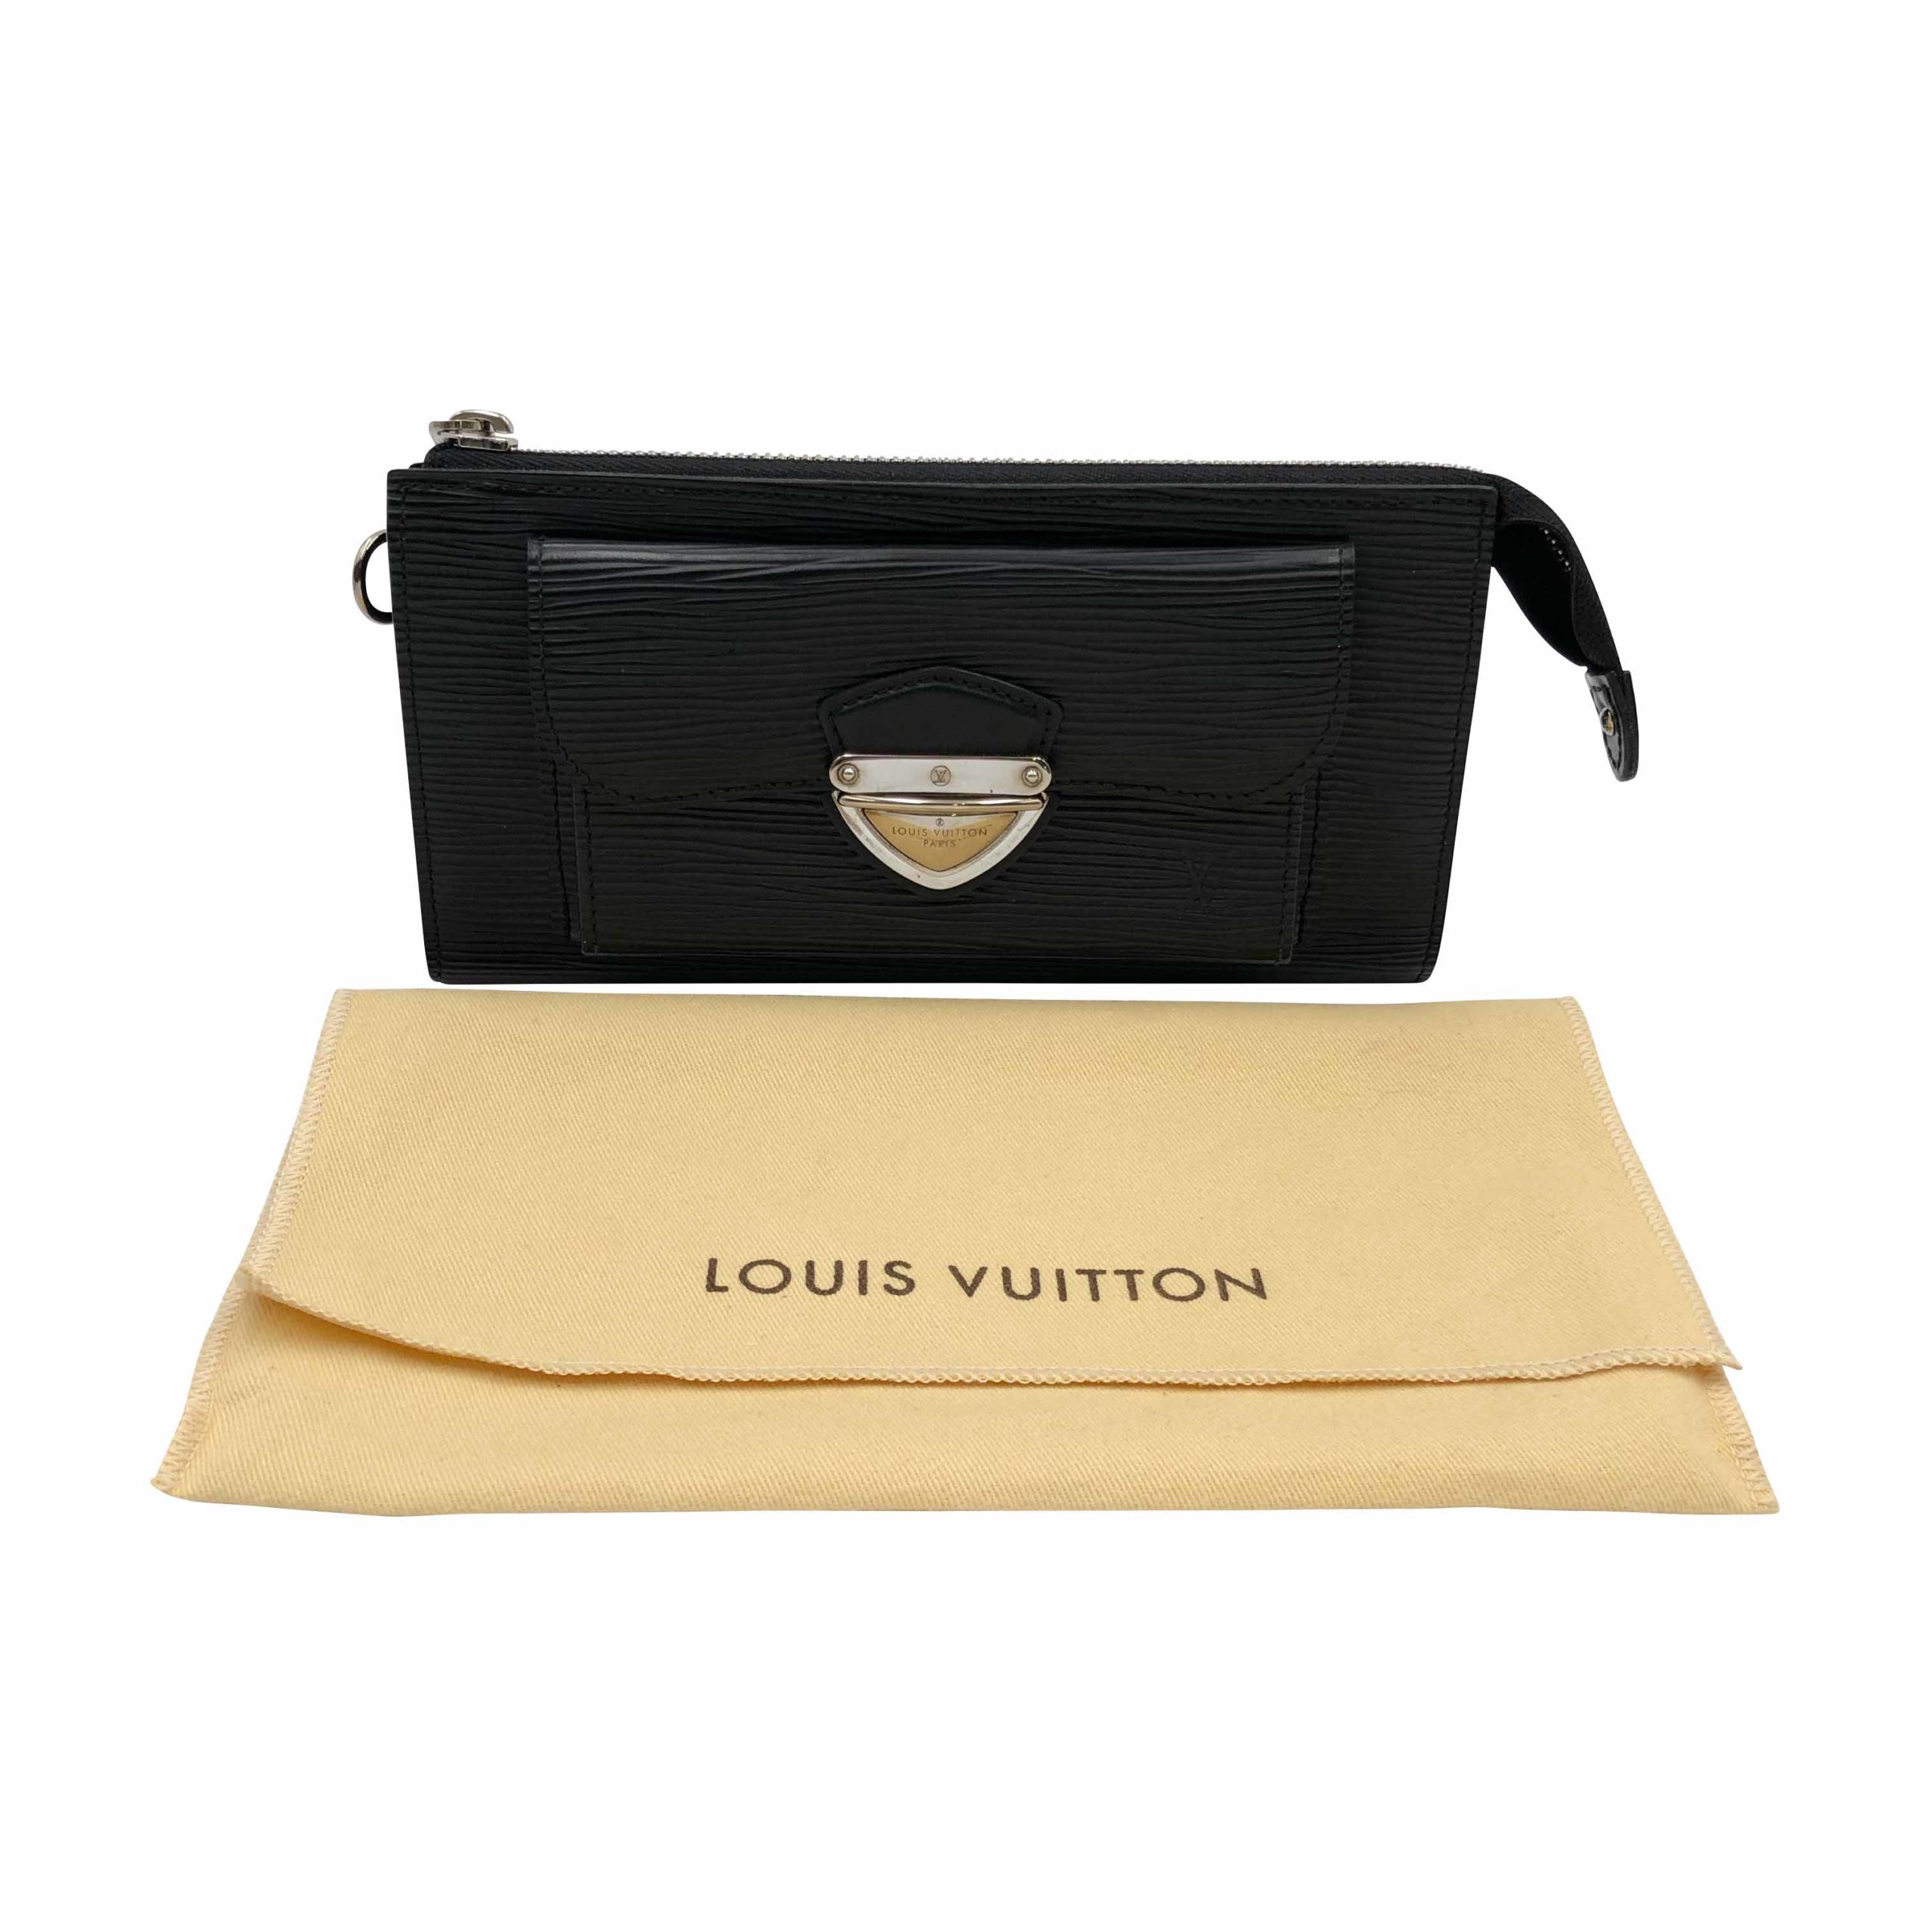 Louis Vuitton wallet in black epi leather - DOWNTOWN UPTOWN Genève